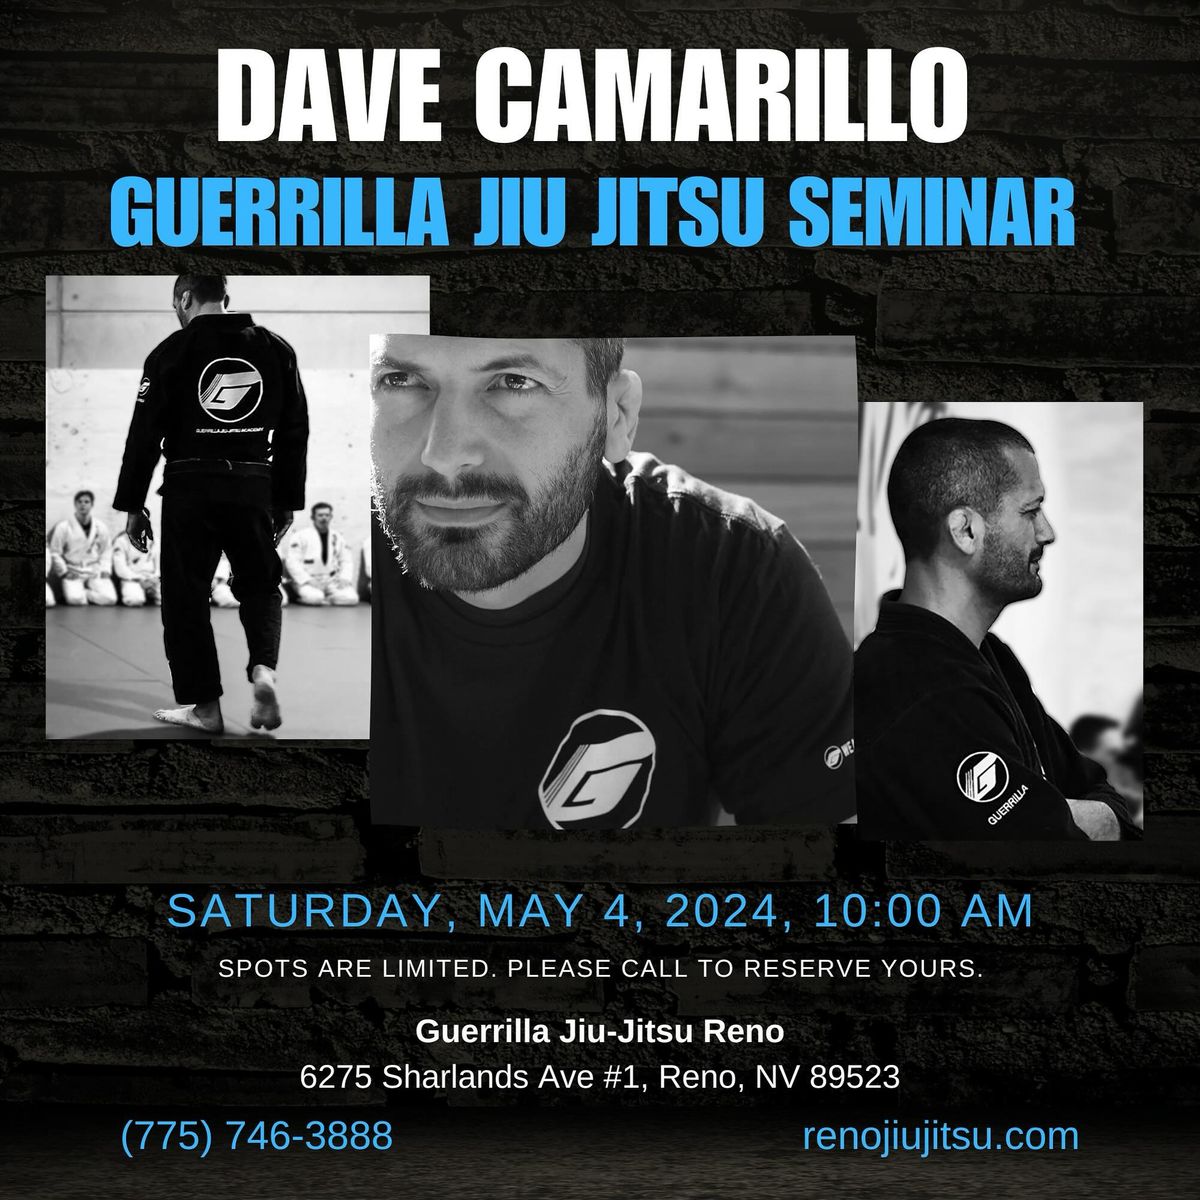 Dave Camarillo Guerrilla Jiu Jitsu Seminar